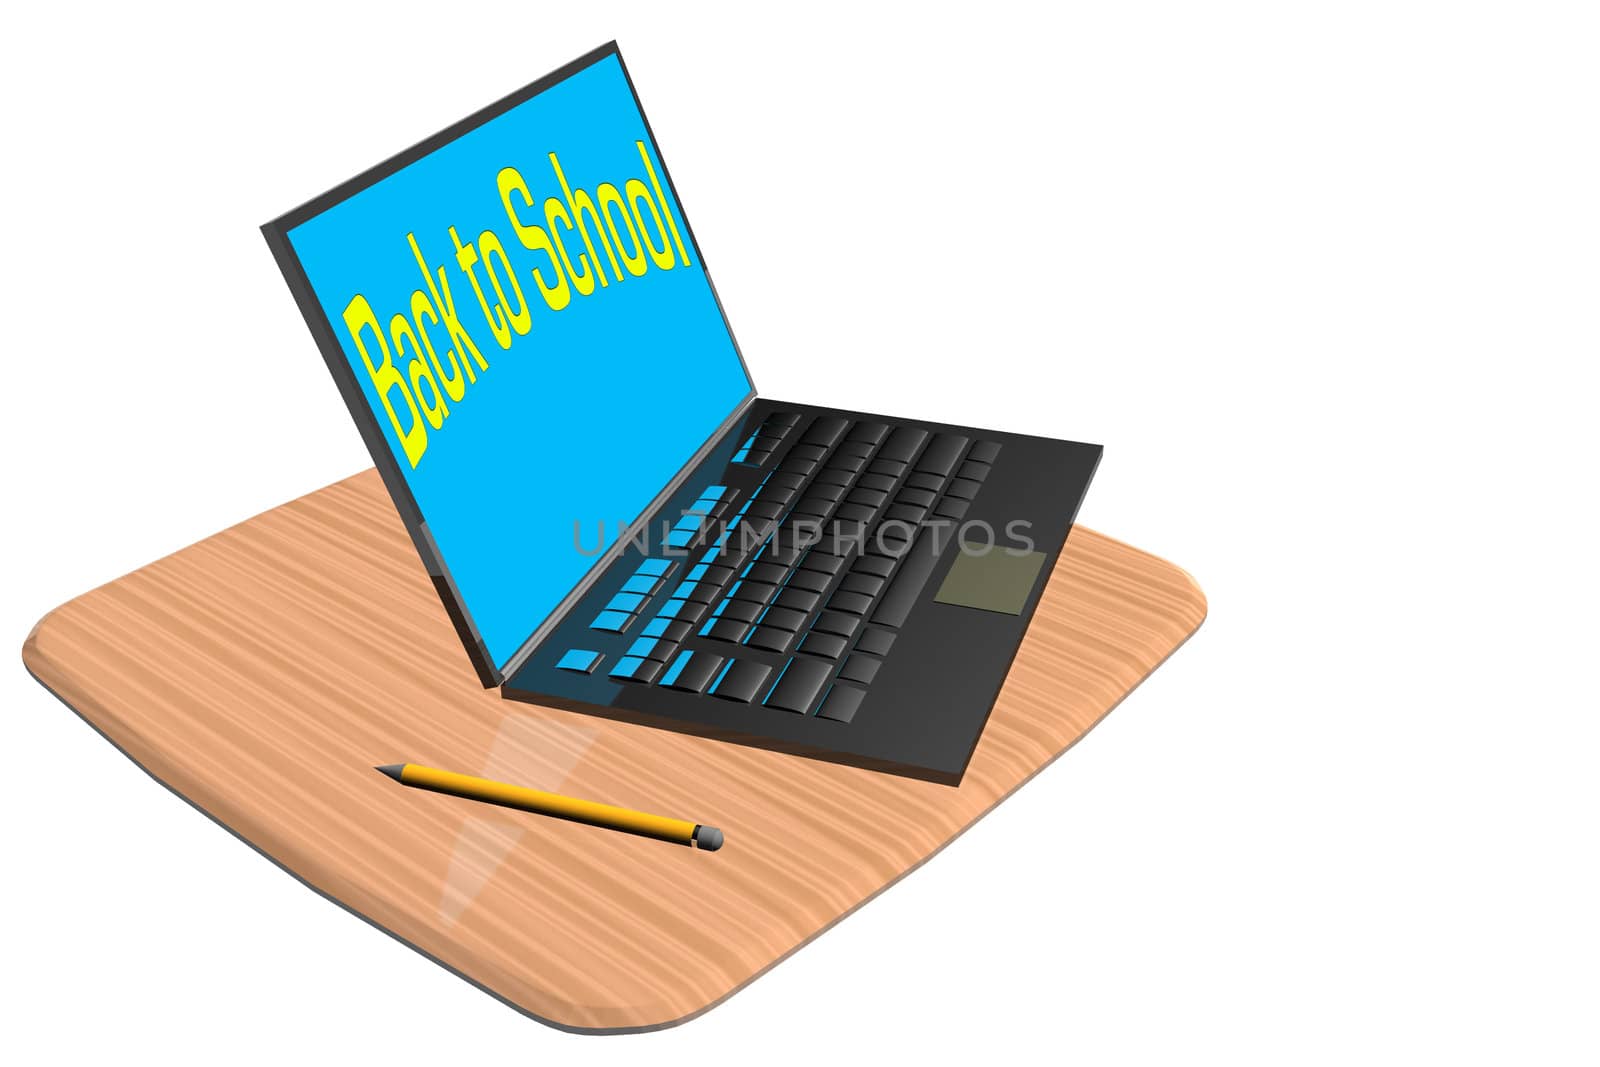 Laptop on school desk with pencil